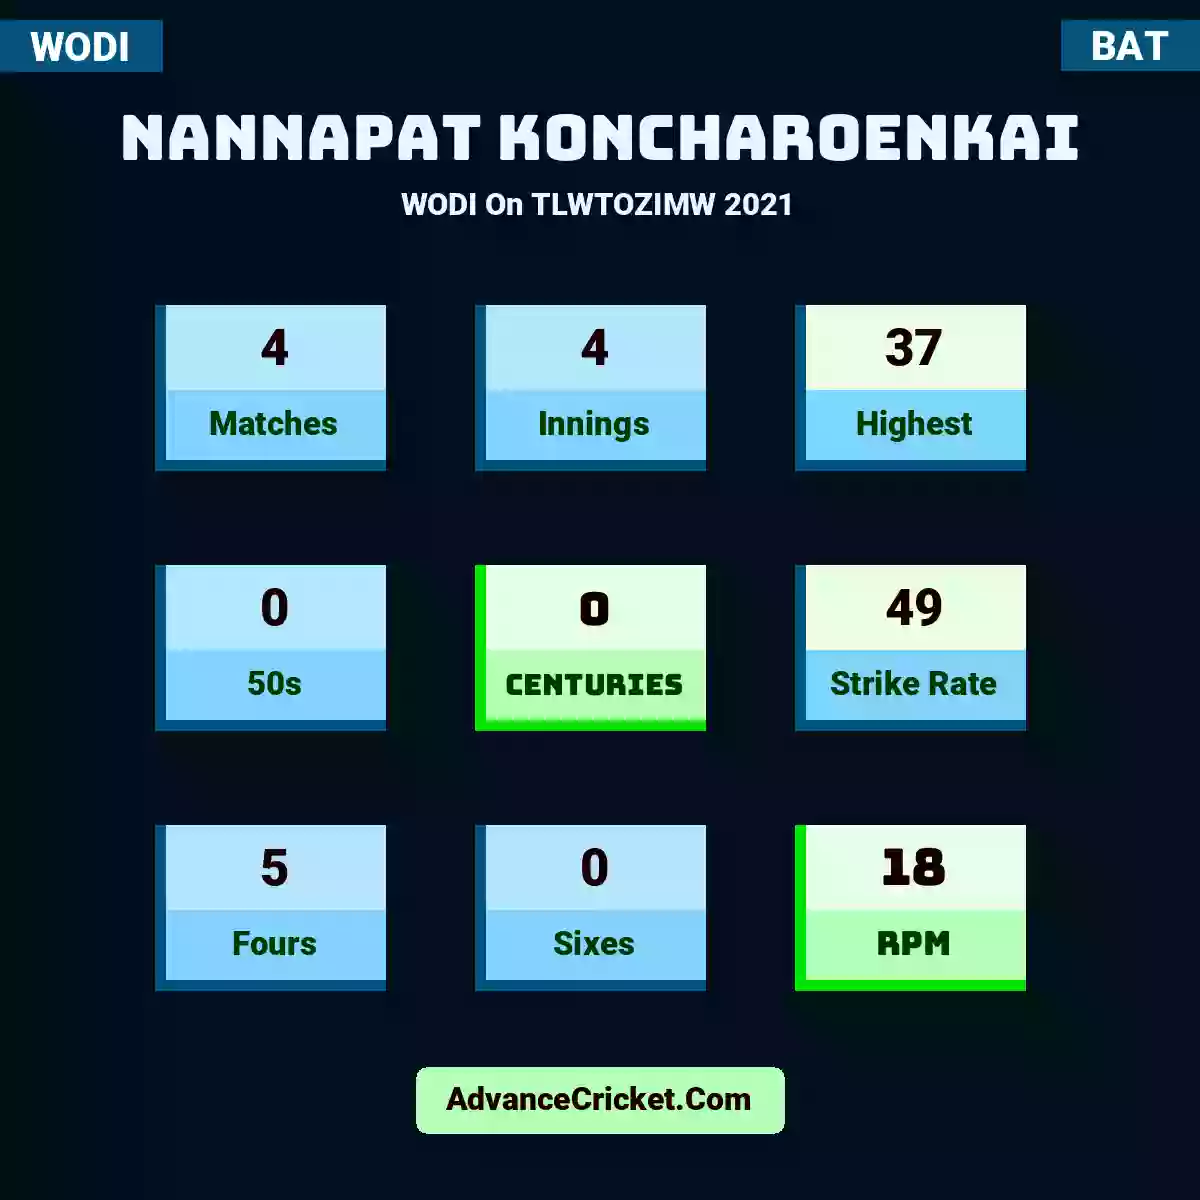 Nannapat Koncharoenkai WODI  On TLWTOZIMW 2021, Nannapat Koncharoenkai played 4 matches, scored 37 runs as highest, 0 half-centuries, and 0 centuries, with a strike rate of 49. N.Koncharoenkai hit 5 fours and 0 sixes, with an RPM of 18.